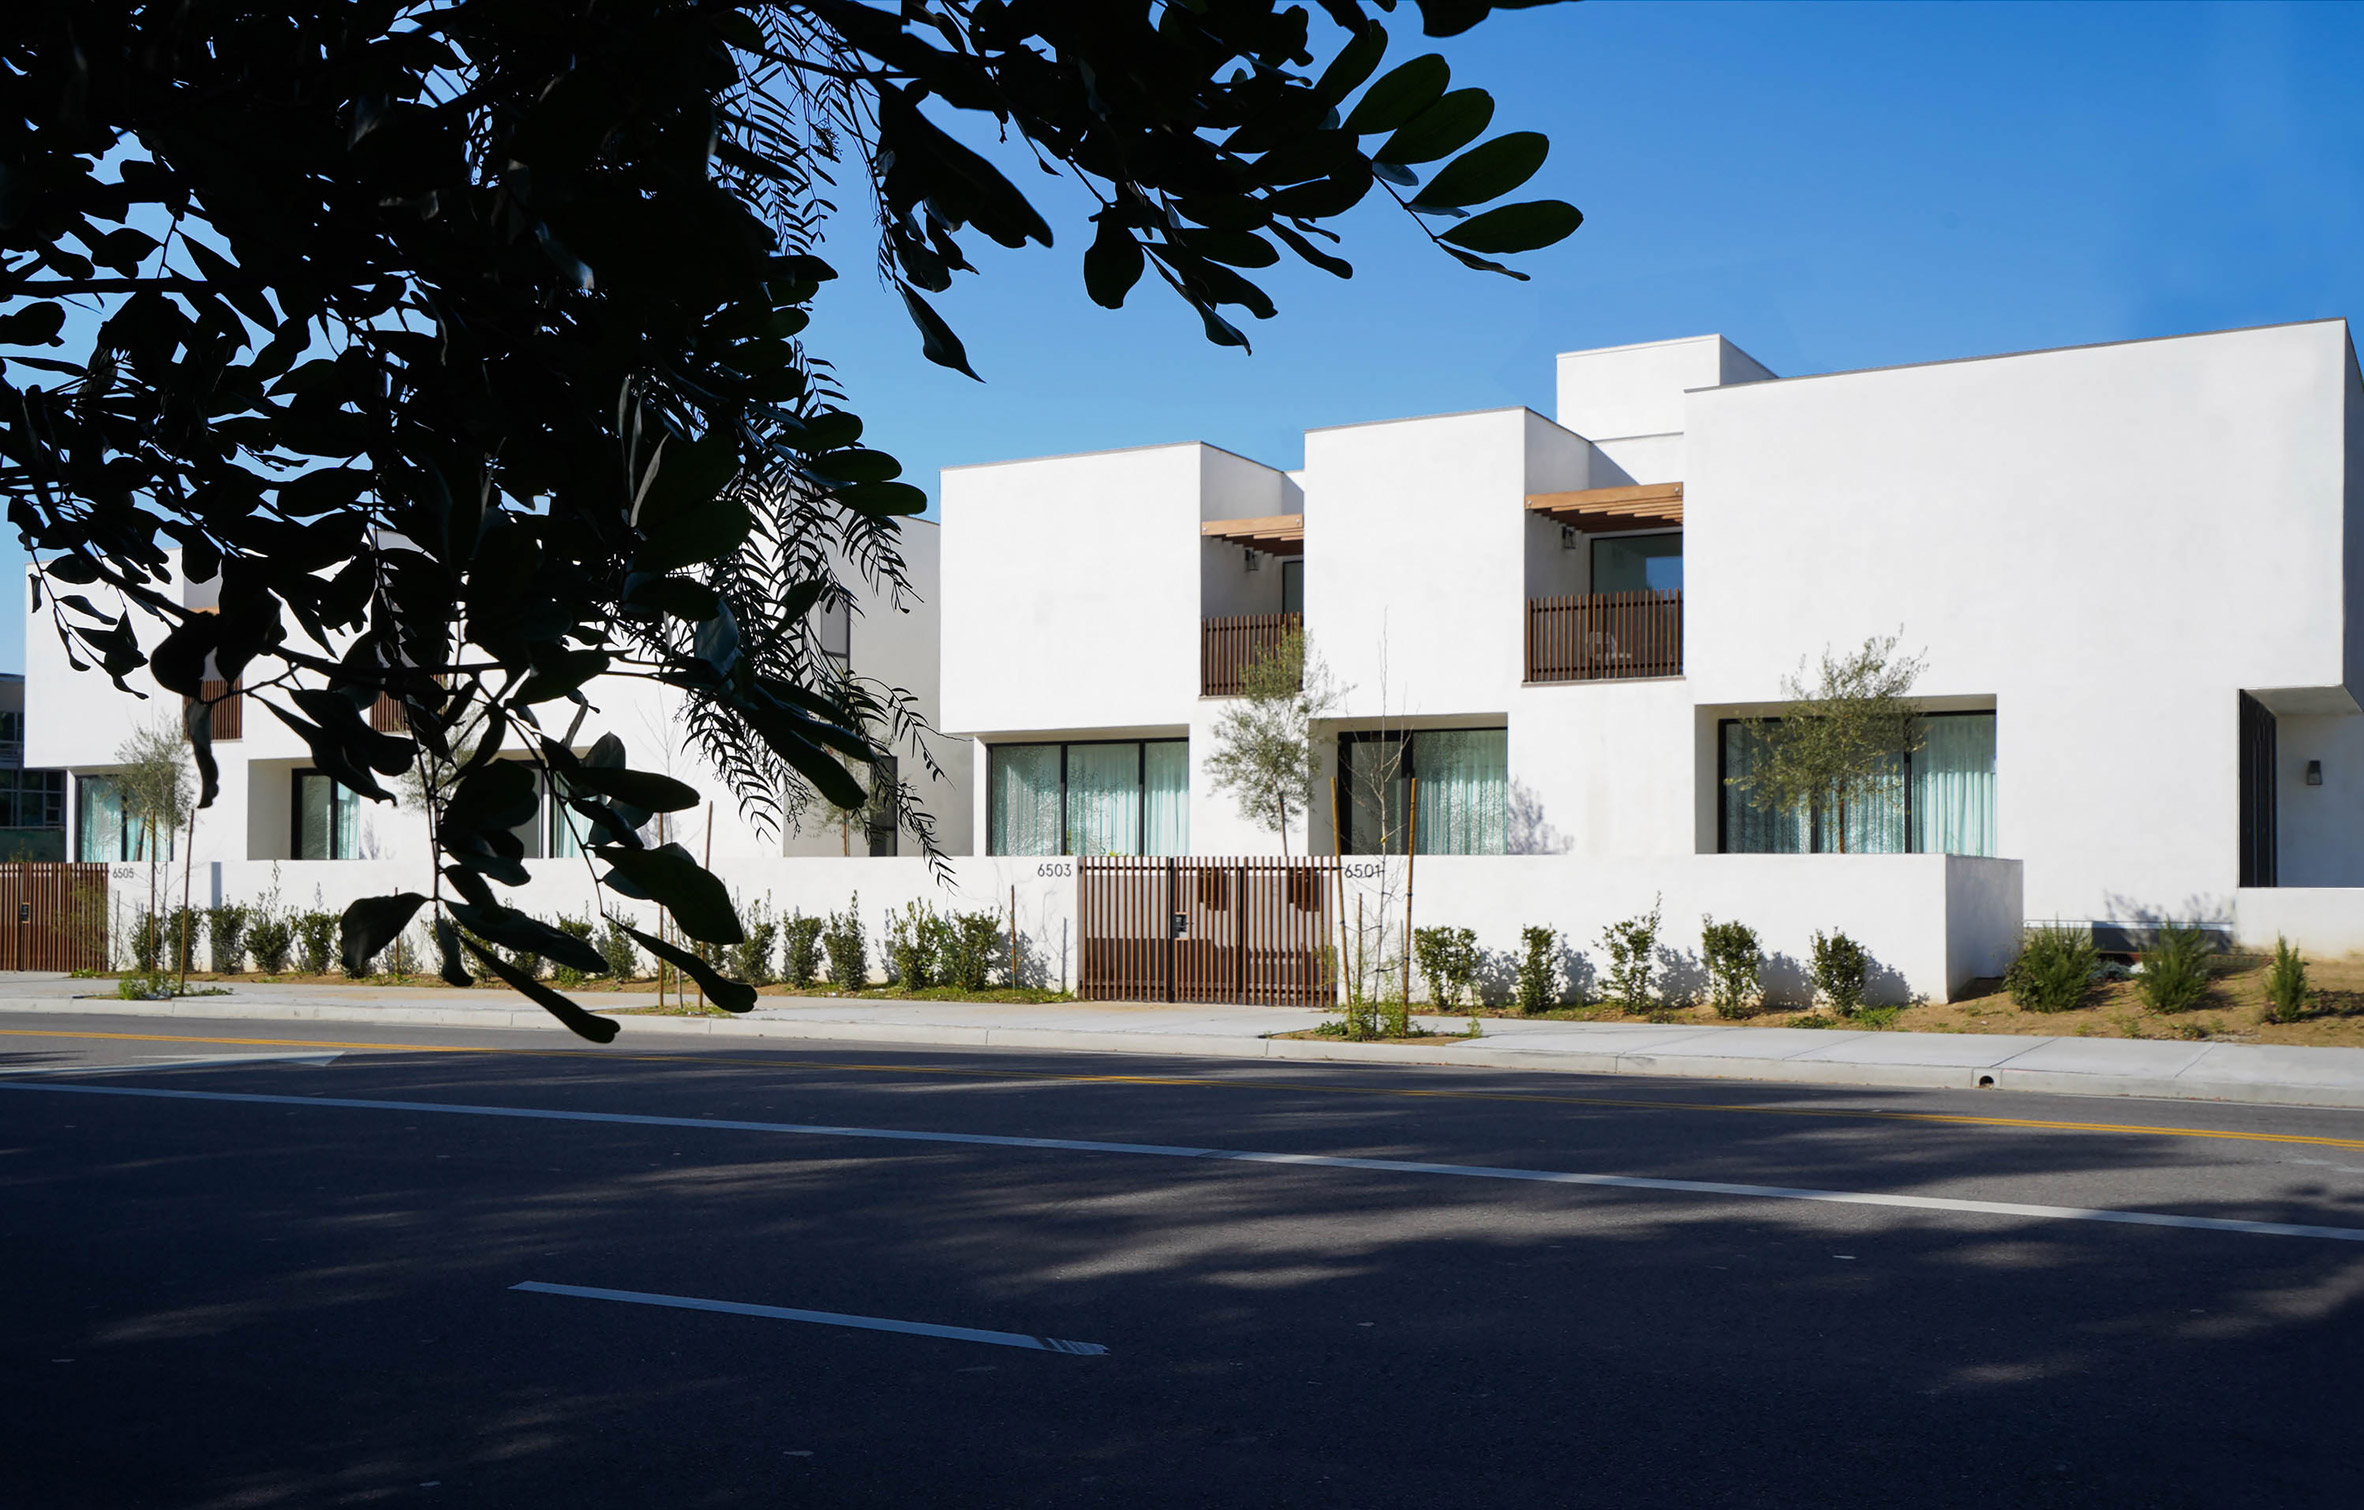 Low-slung rectilinear housing complex in LA clad in white stucco